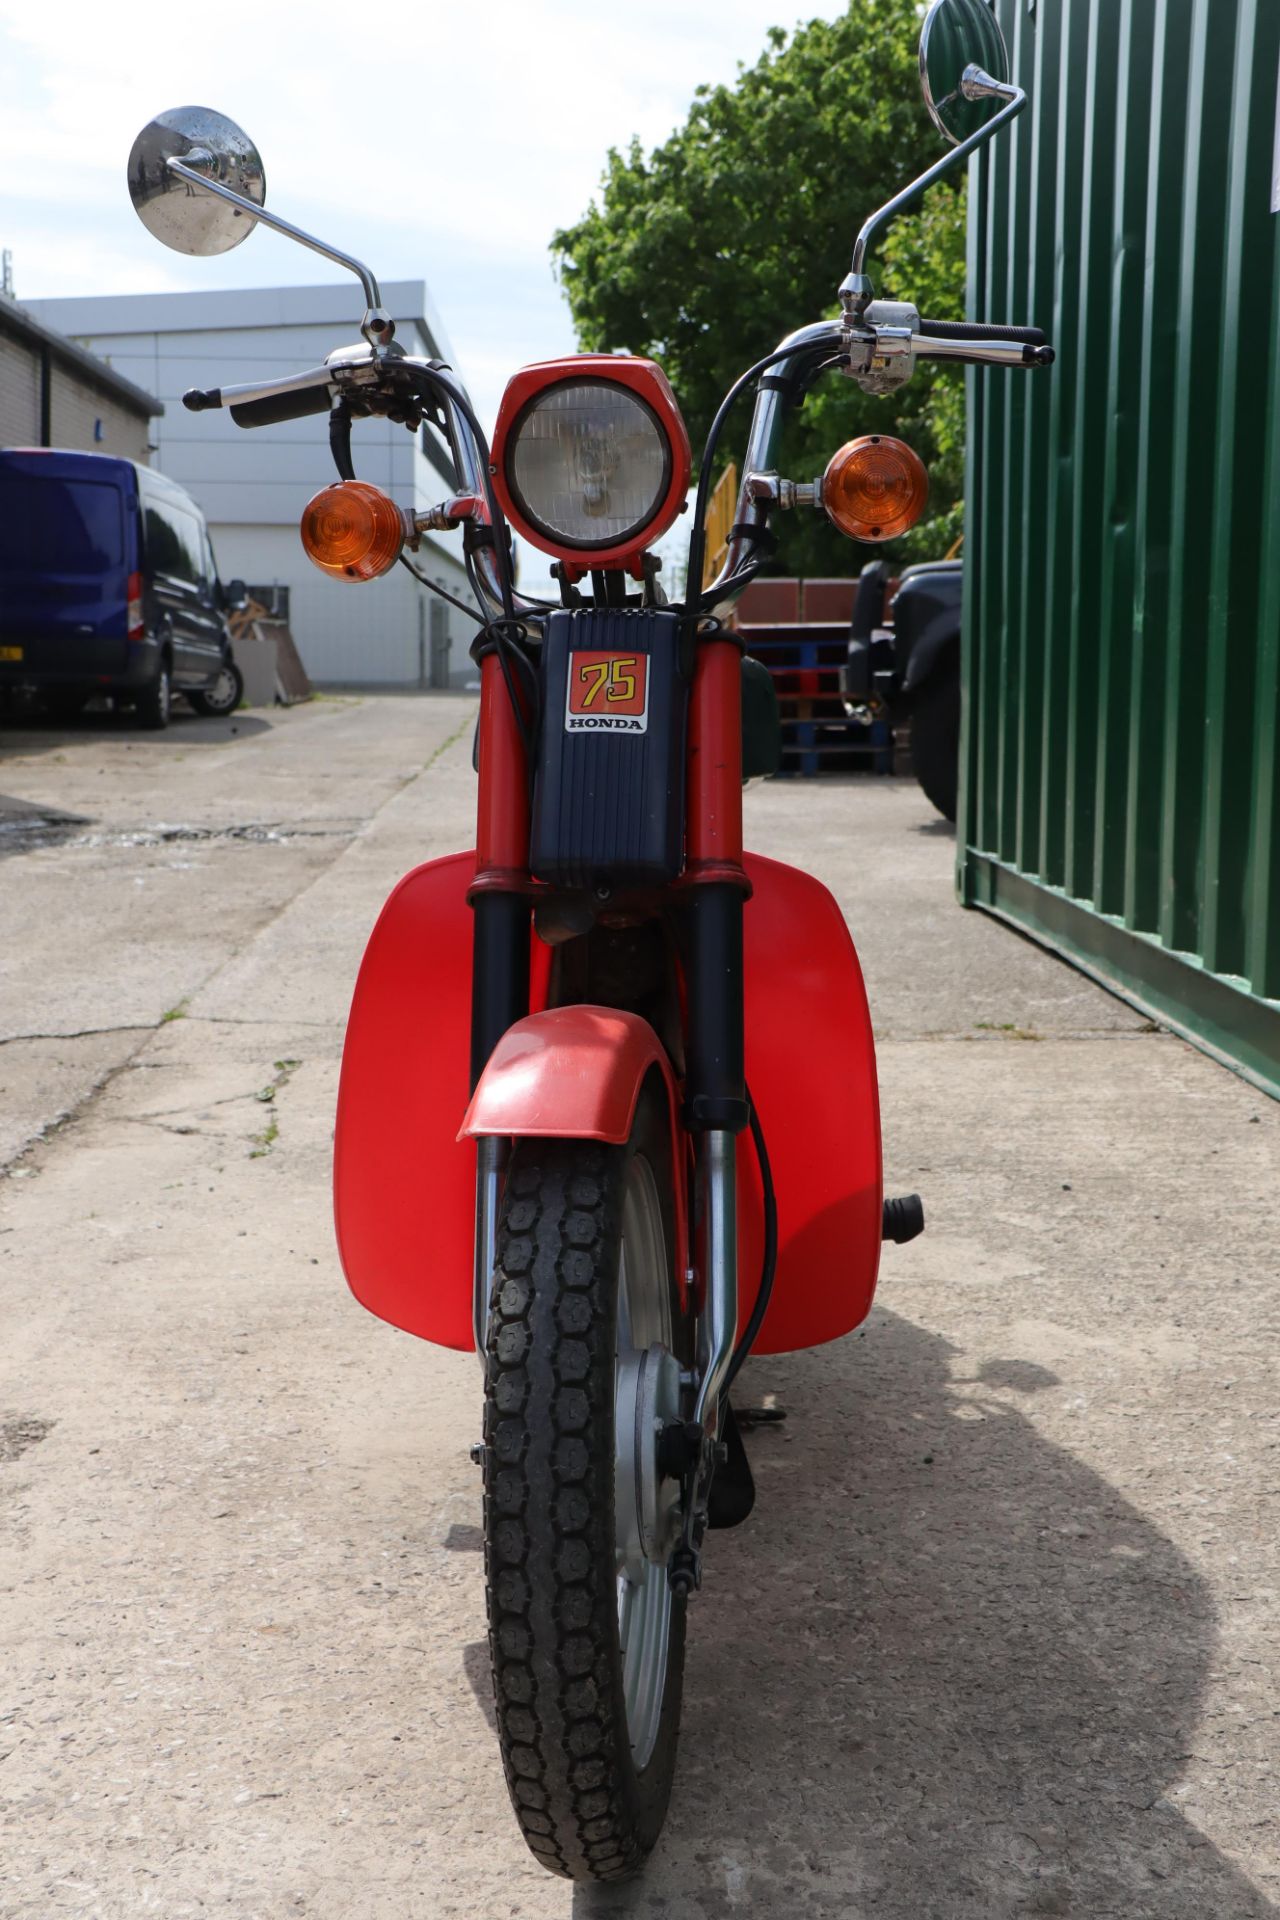 Honda 75 Motorcycle - Image 2 of 3